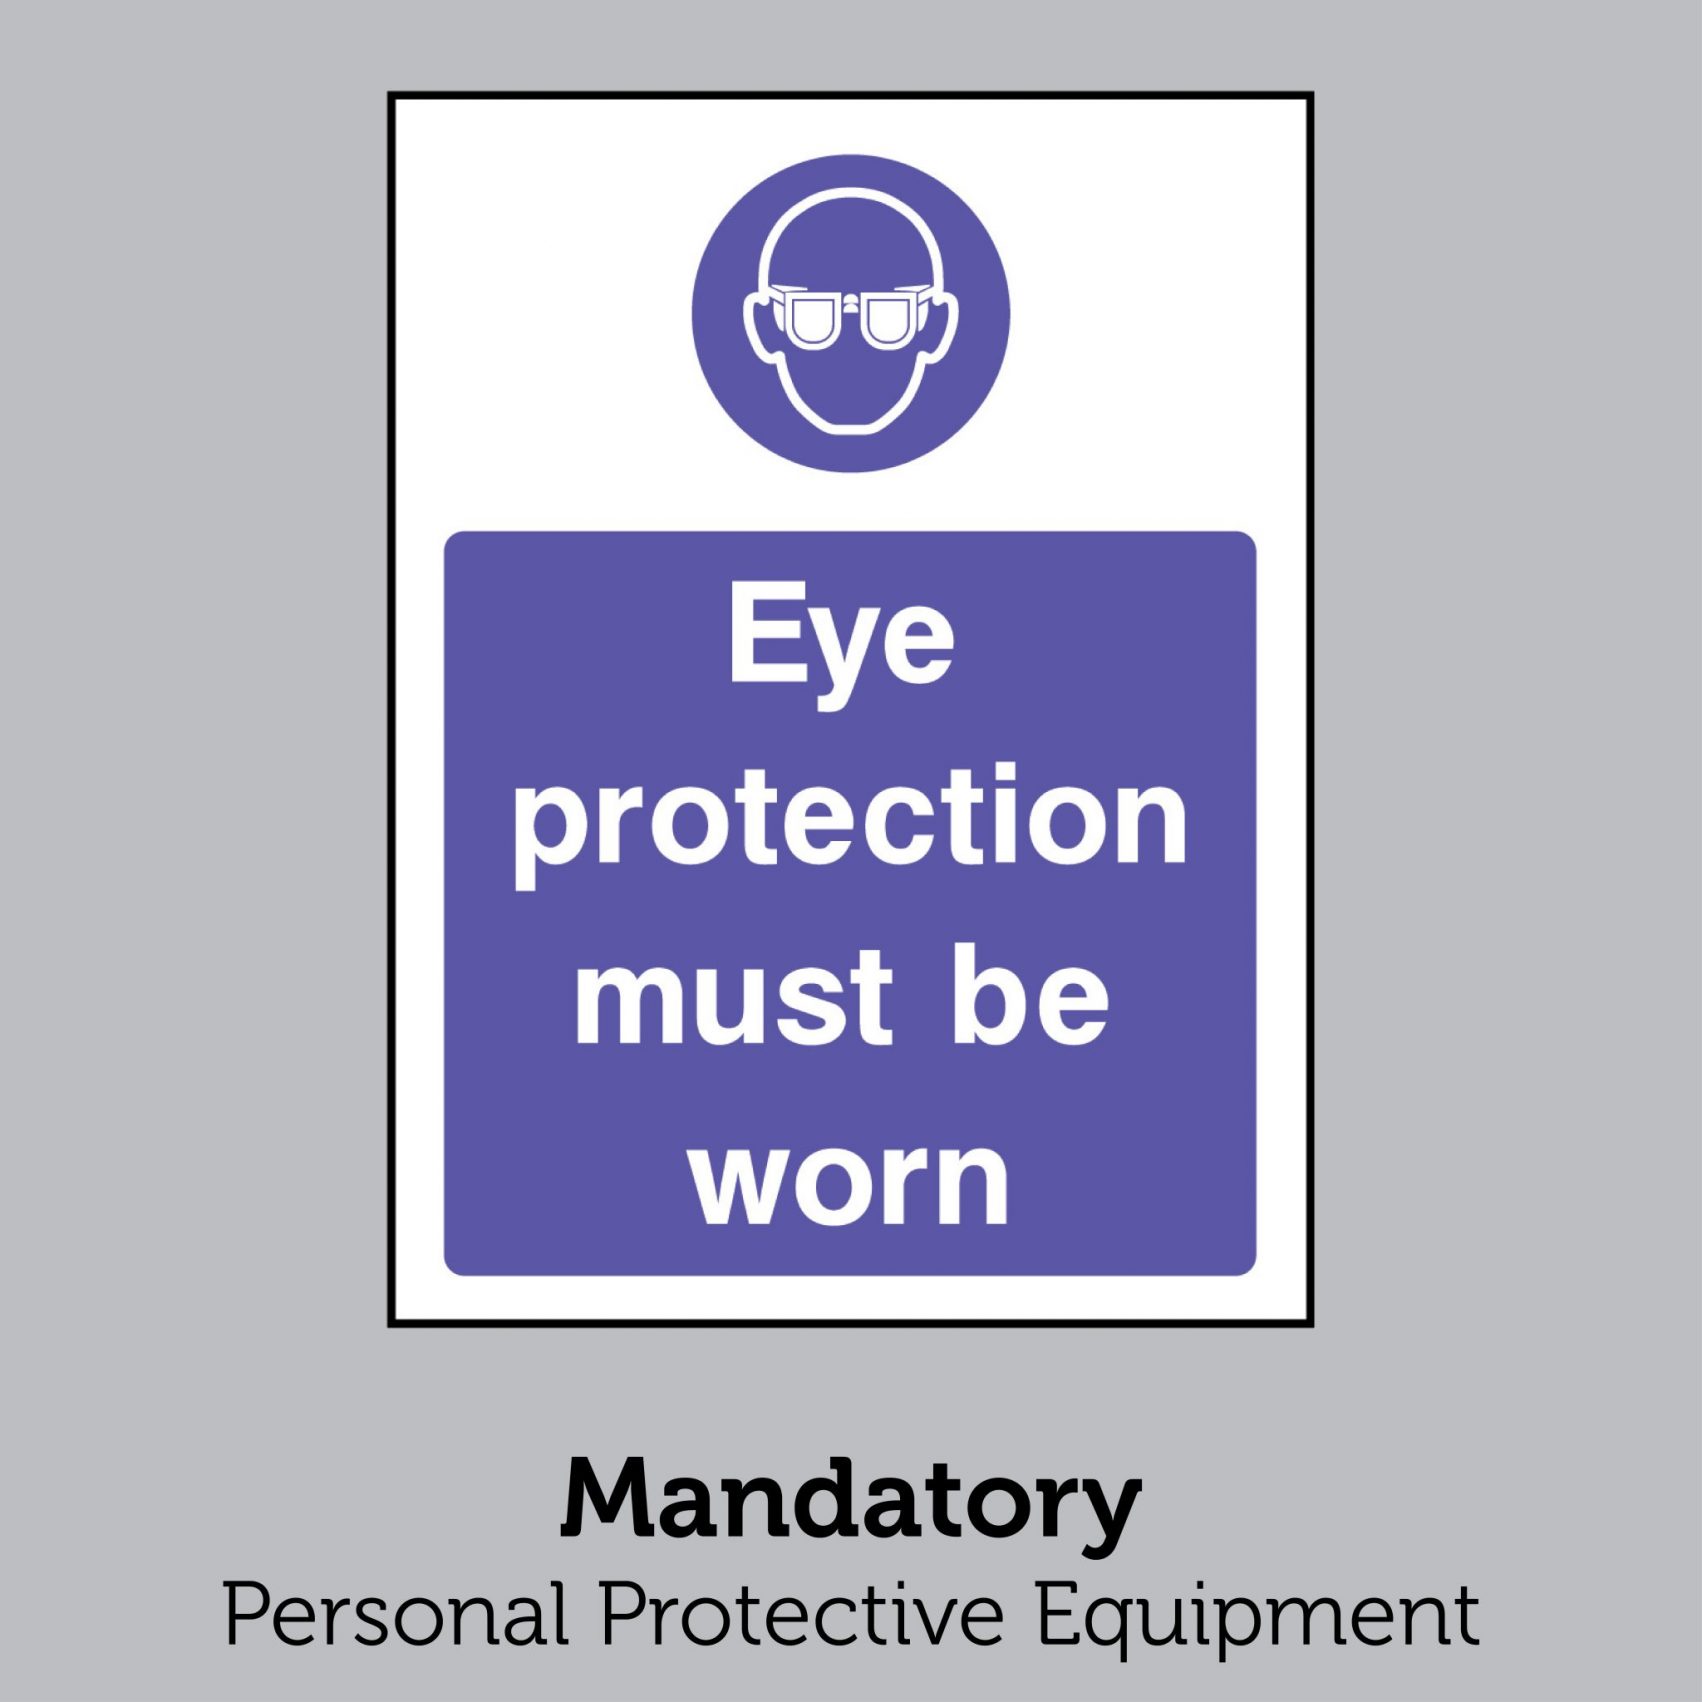 Mandatory - Personal Protective Equipment